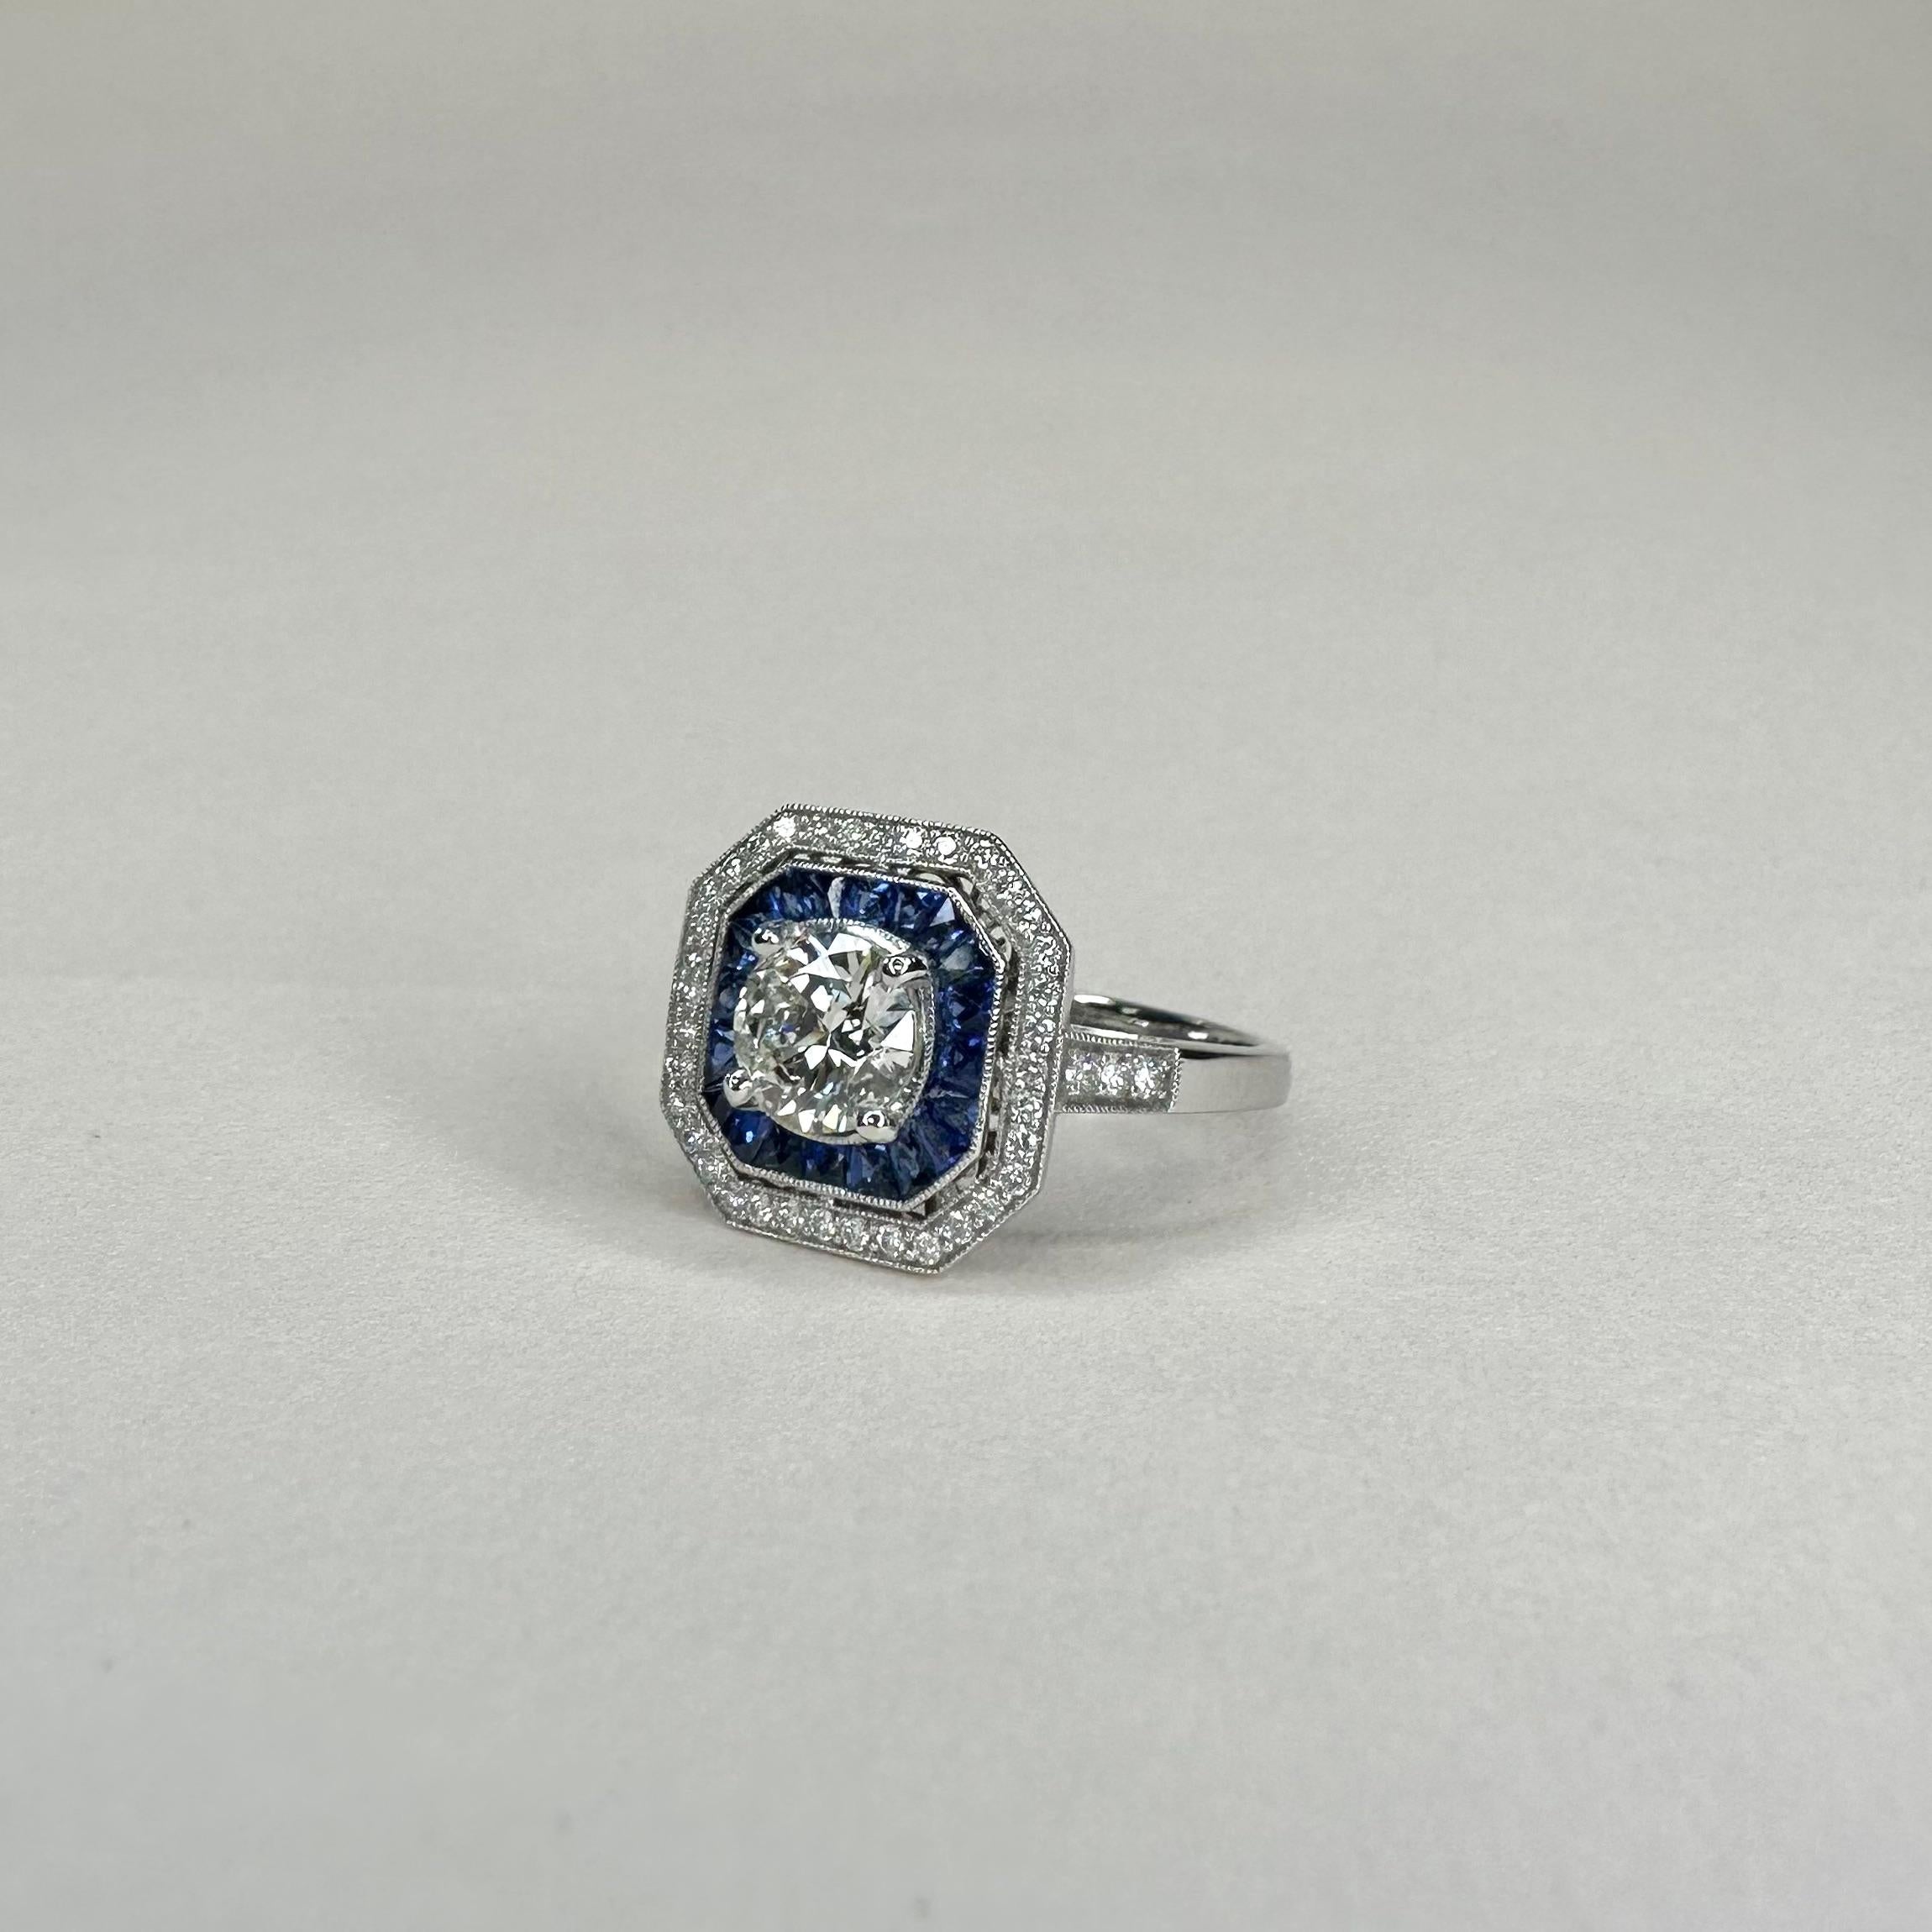 For Sale:  Art Deco Style Platinum Calibre Cut Sapphire Ring With 0.70 Carat Diamond GIA 4